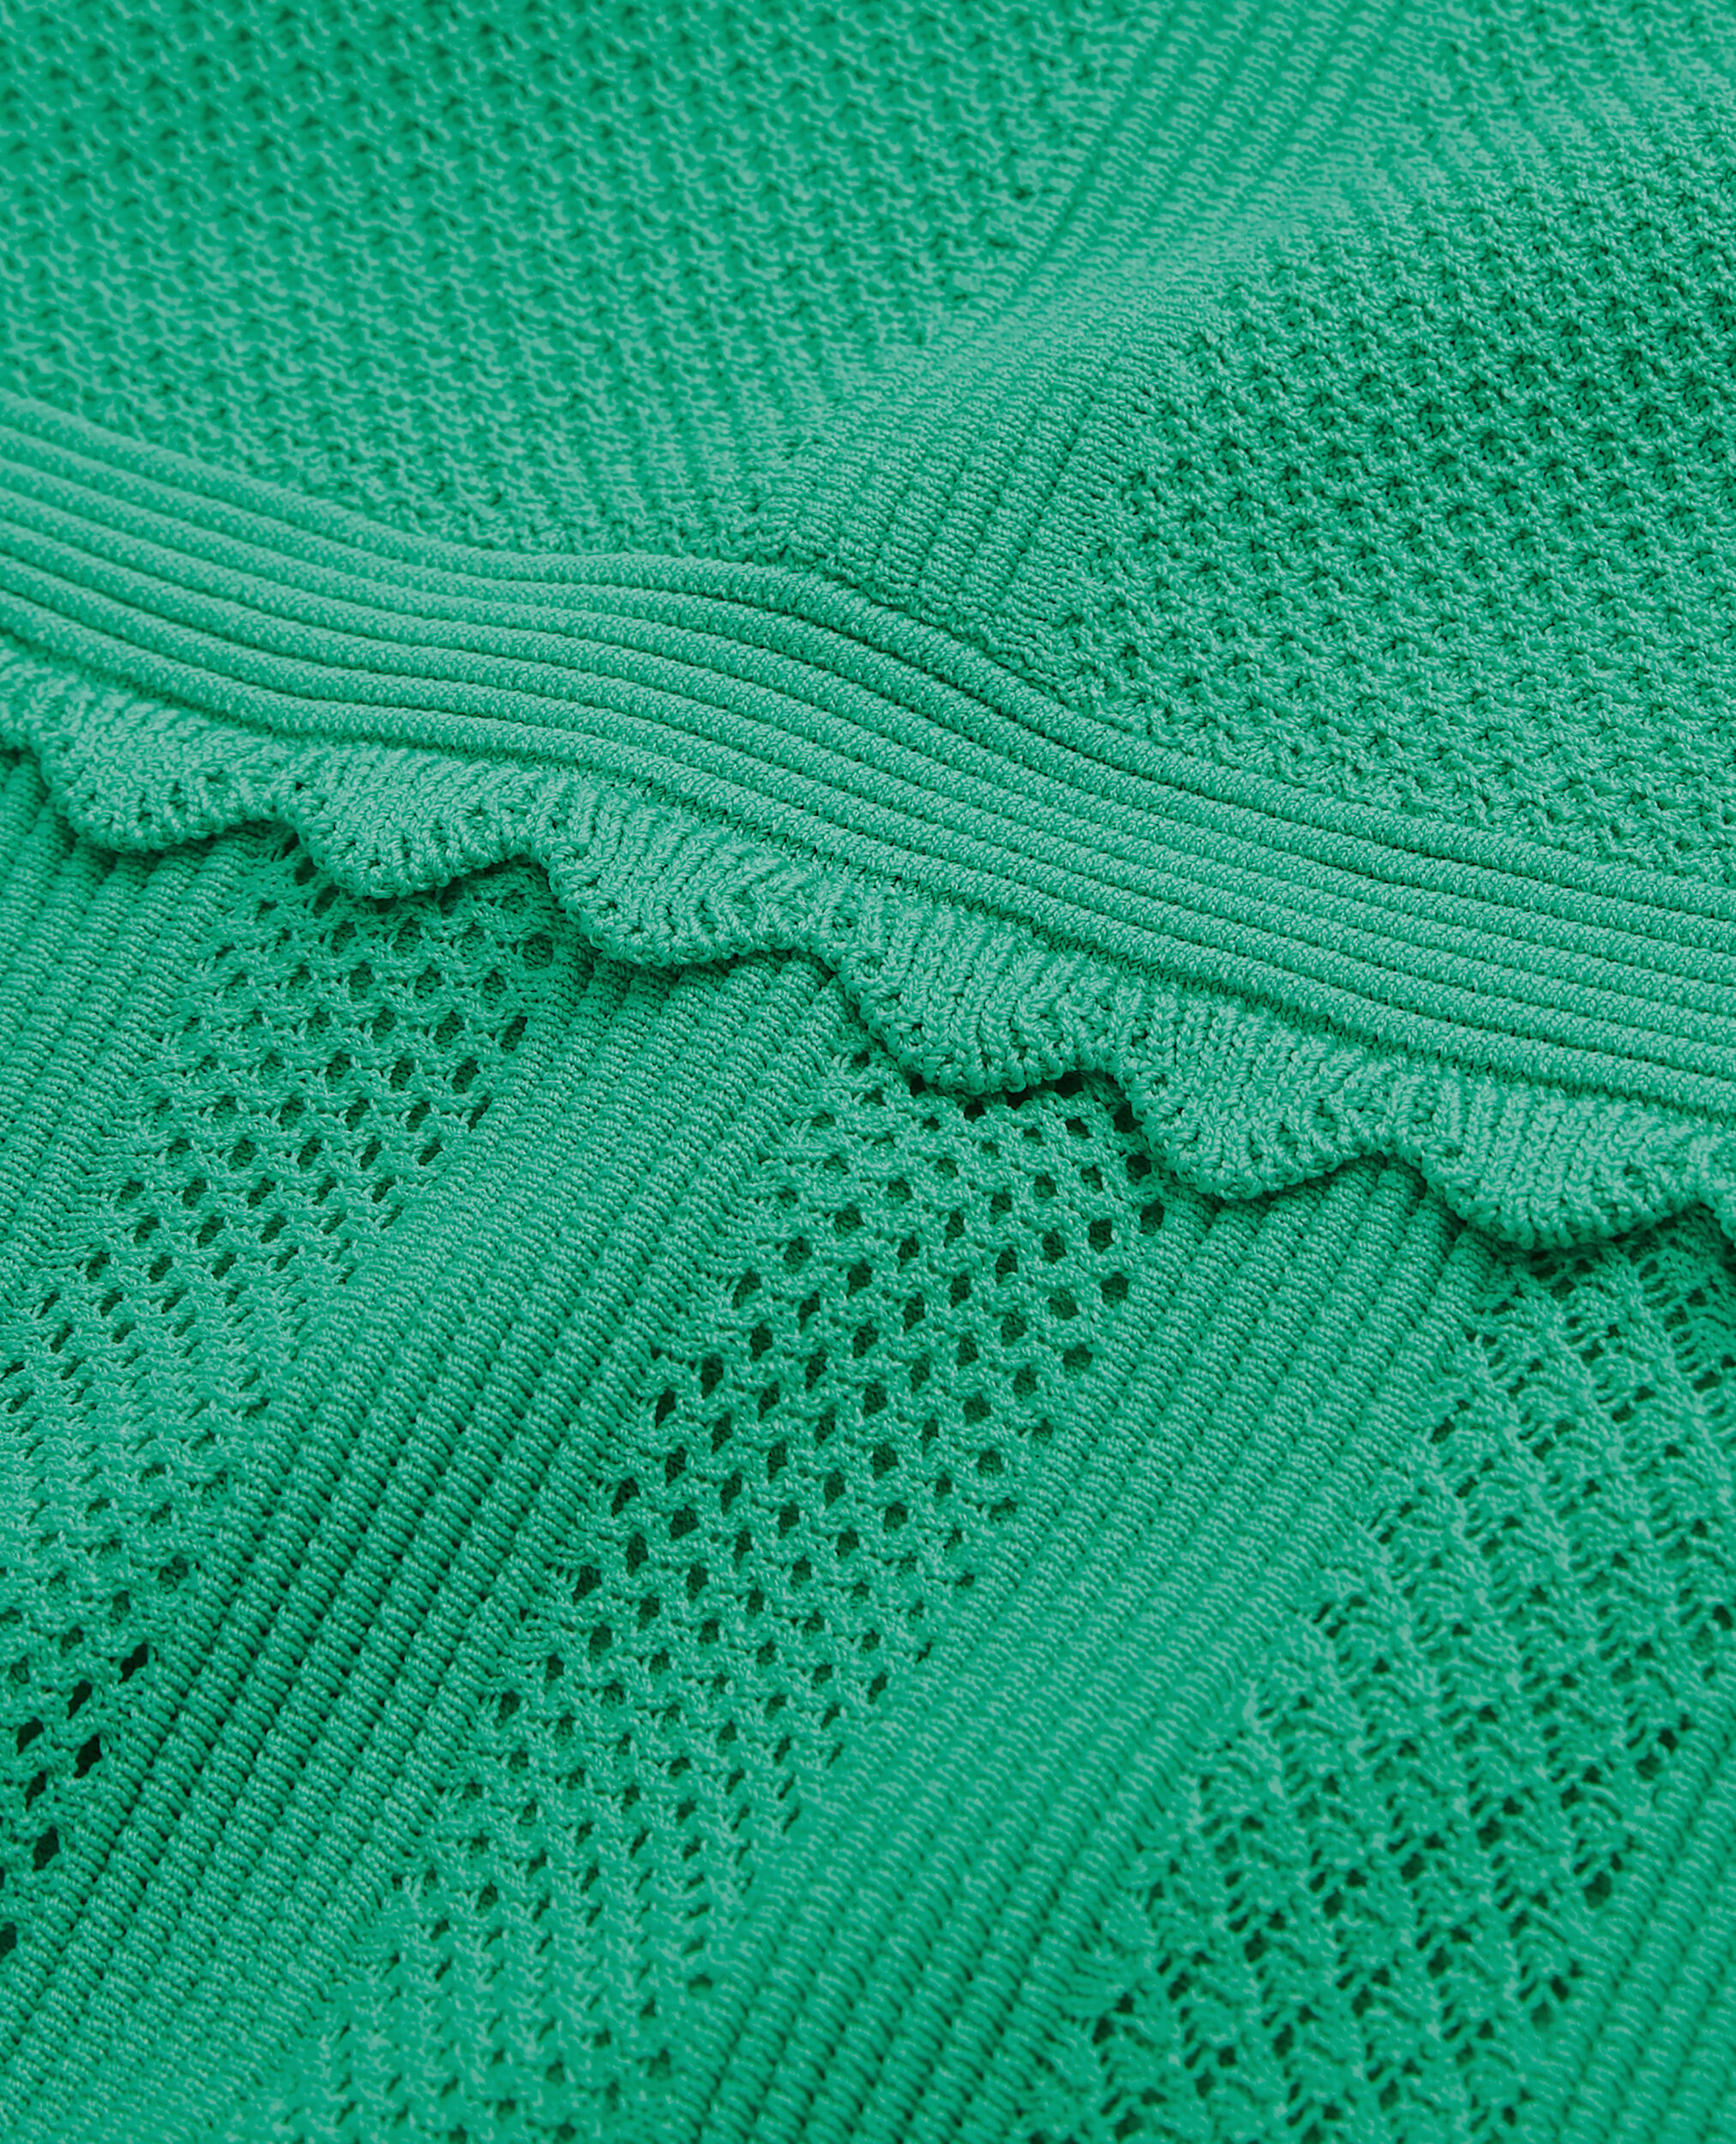 Long green dress in openwork mesh, GREEN, hi-res image number null